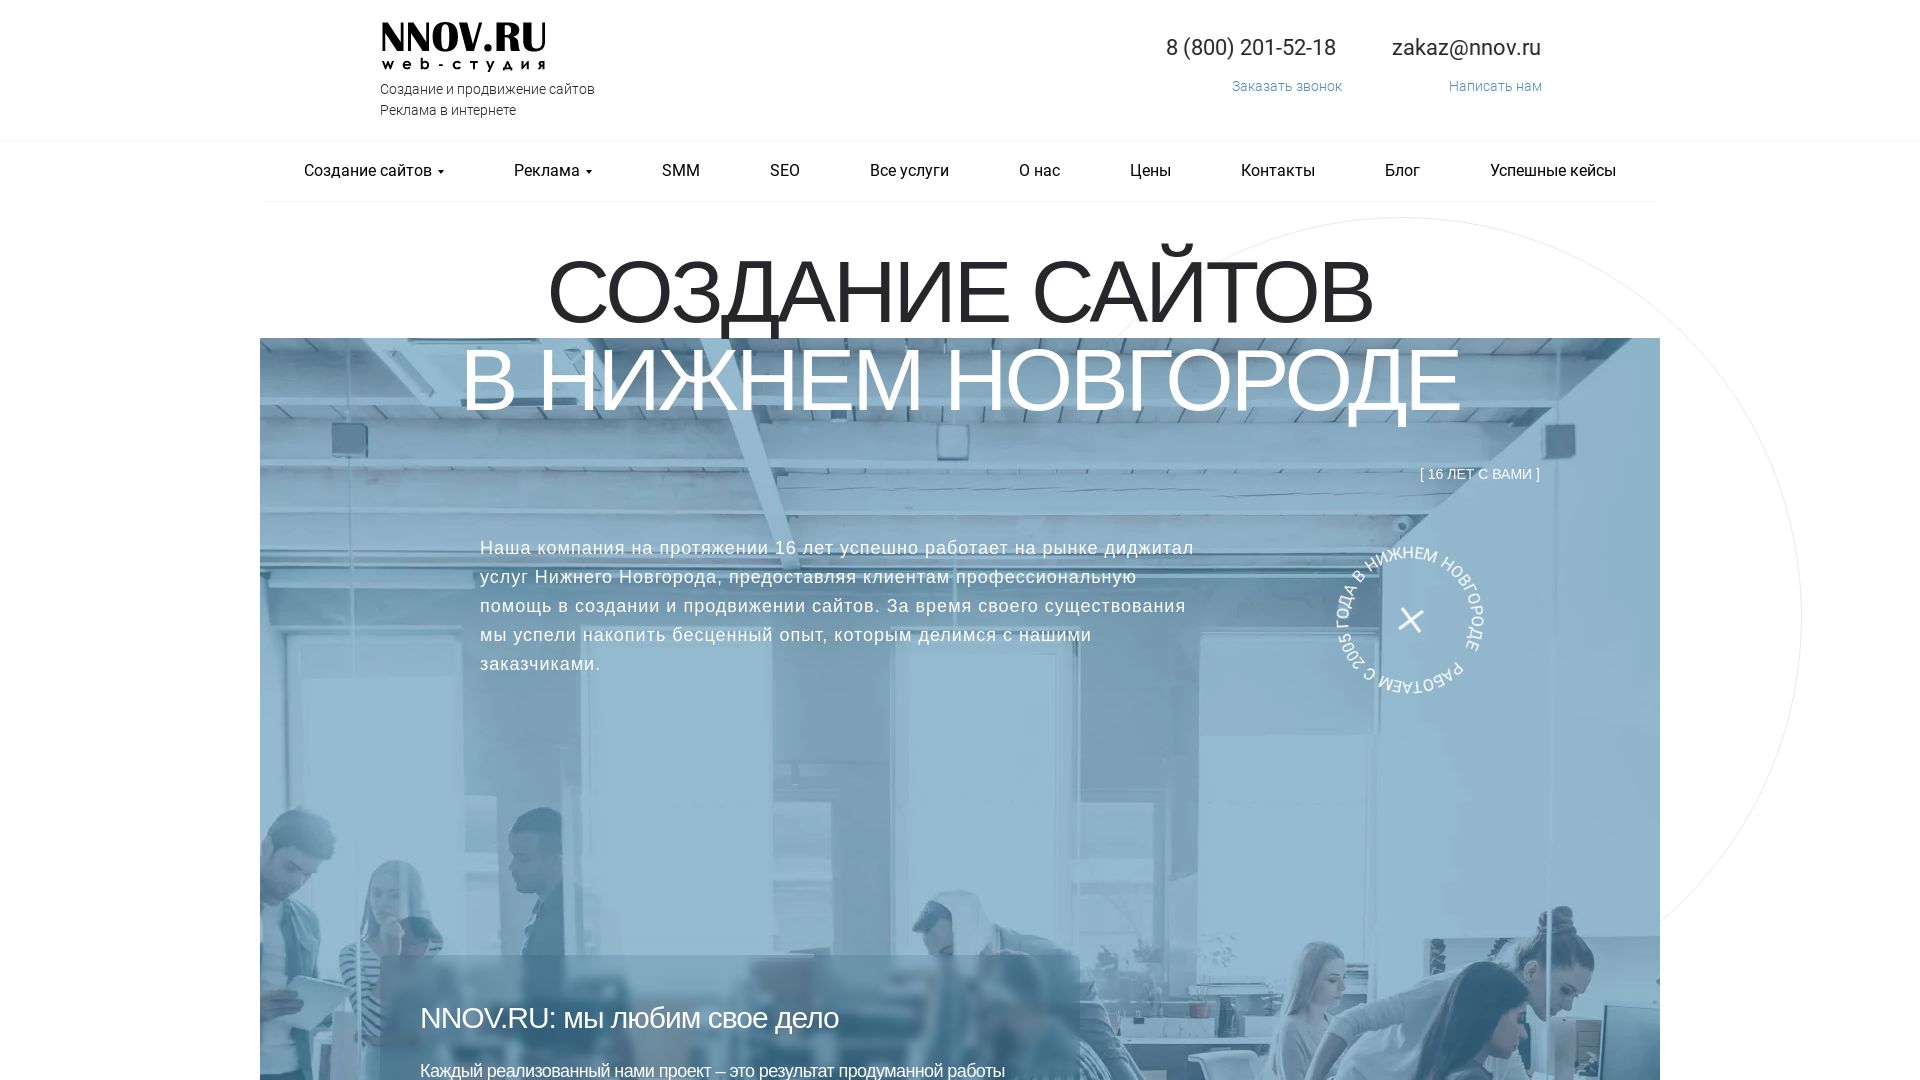 État du site web nnov.ru est   EN LIGNE